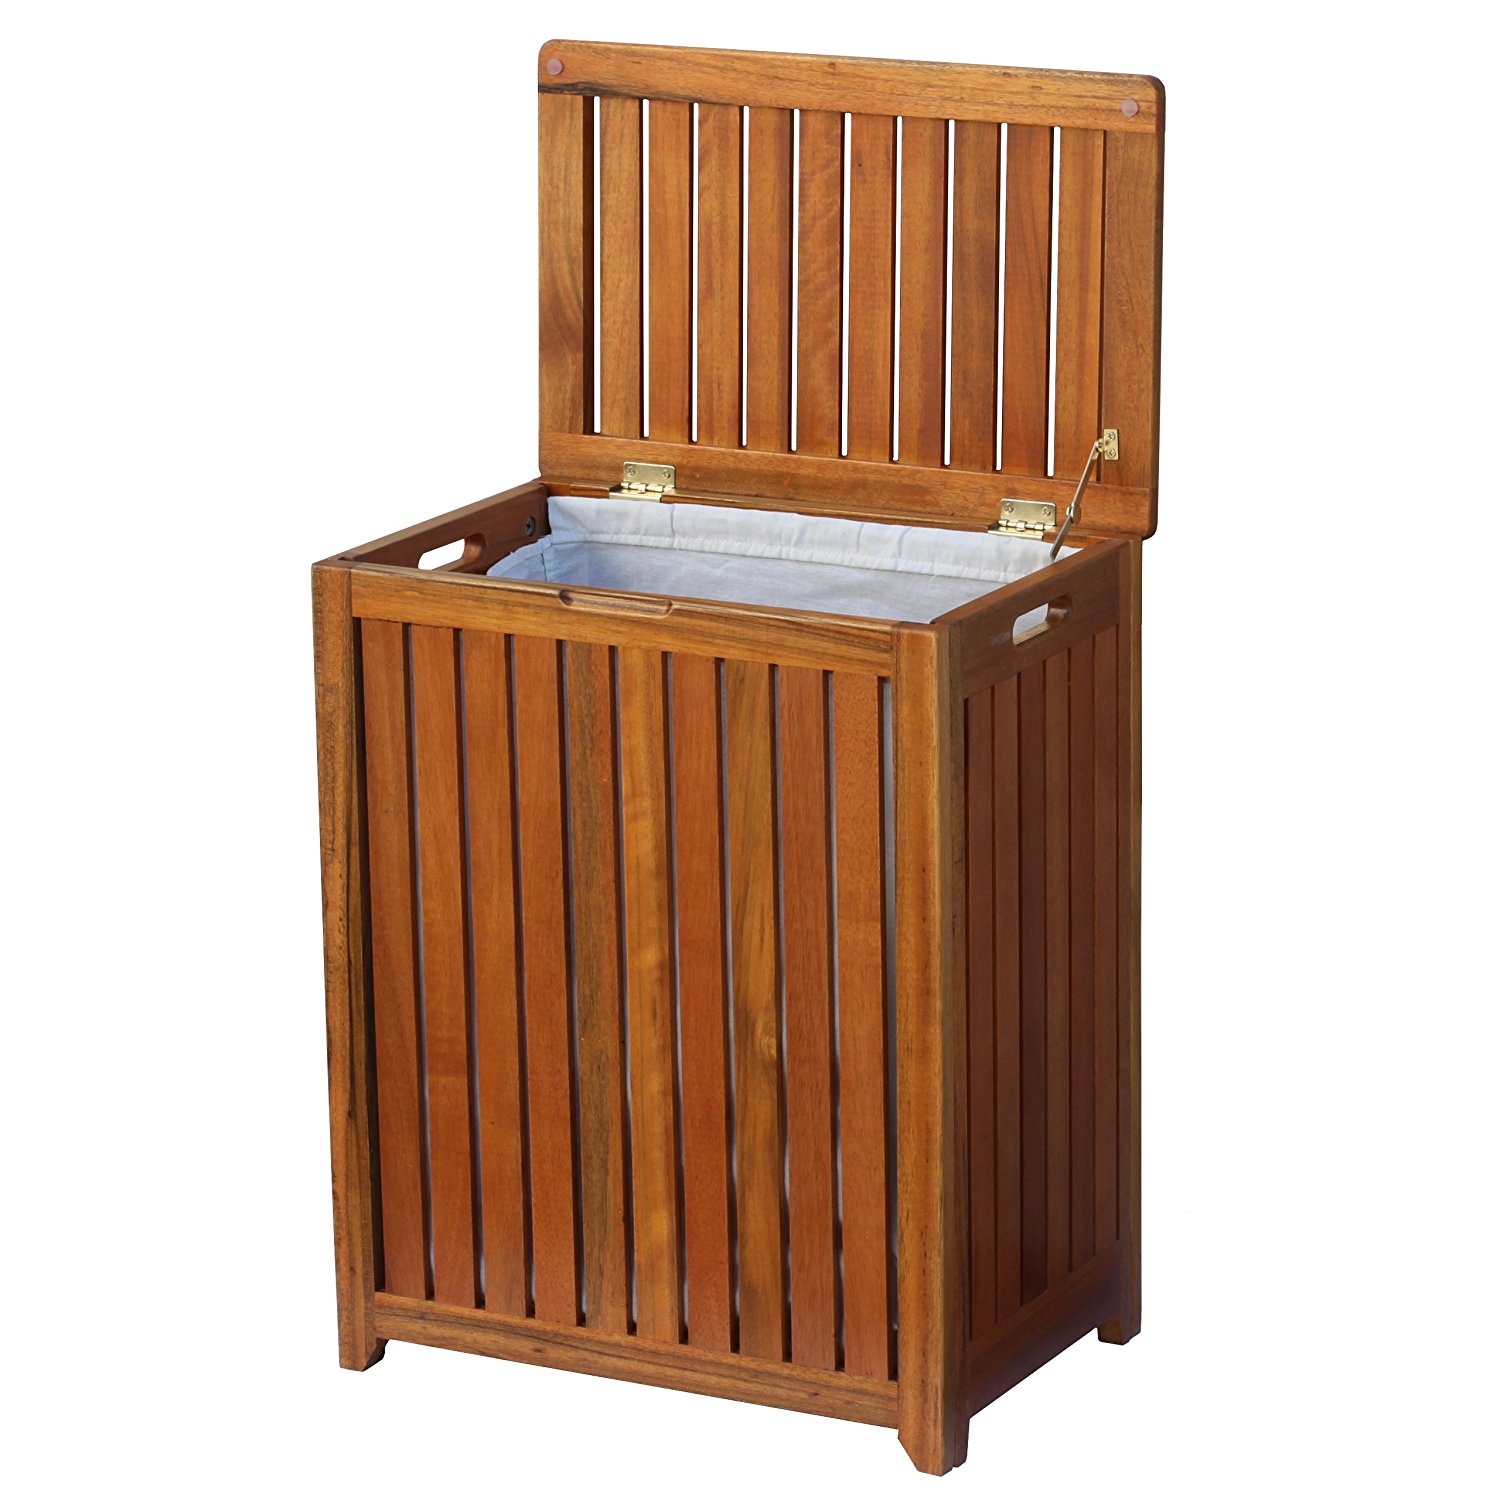 Amazon.com: Oceanstar Solid Wood Spa Laundry Hamper: Home & Kitchen